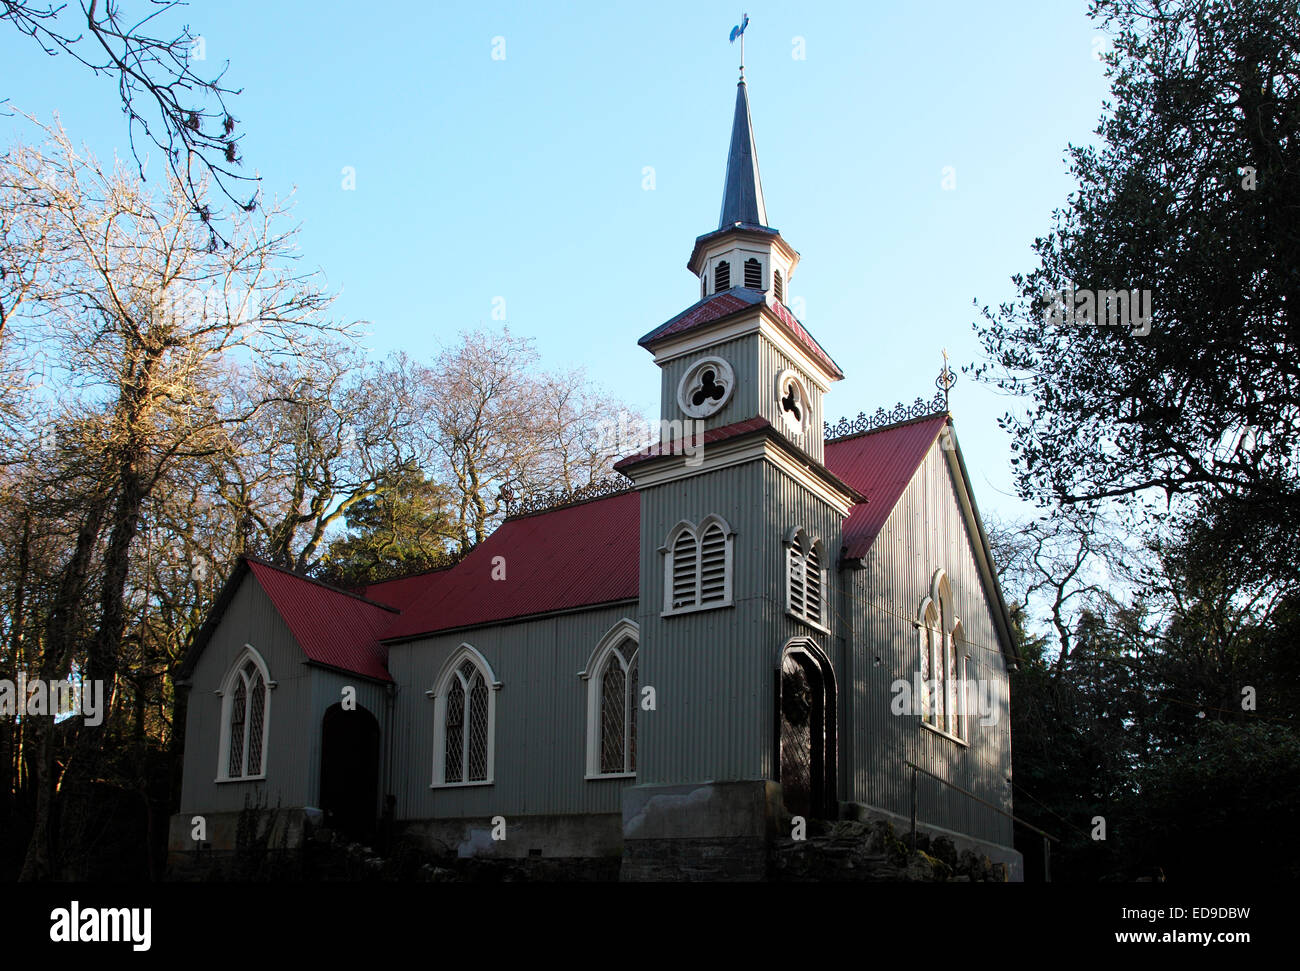 St Peters Zinn Tabernakel, Wellpappe Zinn Kirche in Irland im 19. Jahrhundert aus der Schweiz importiert. Stockfoto